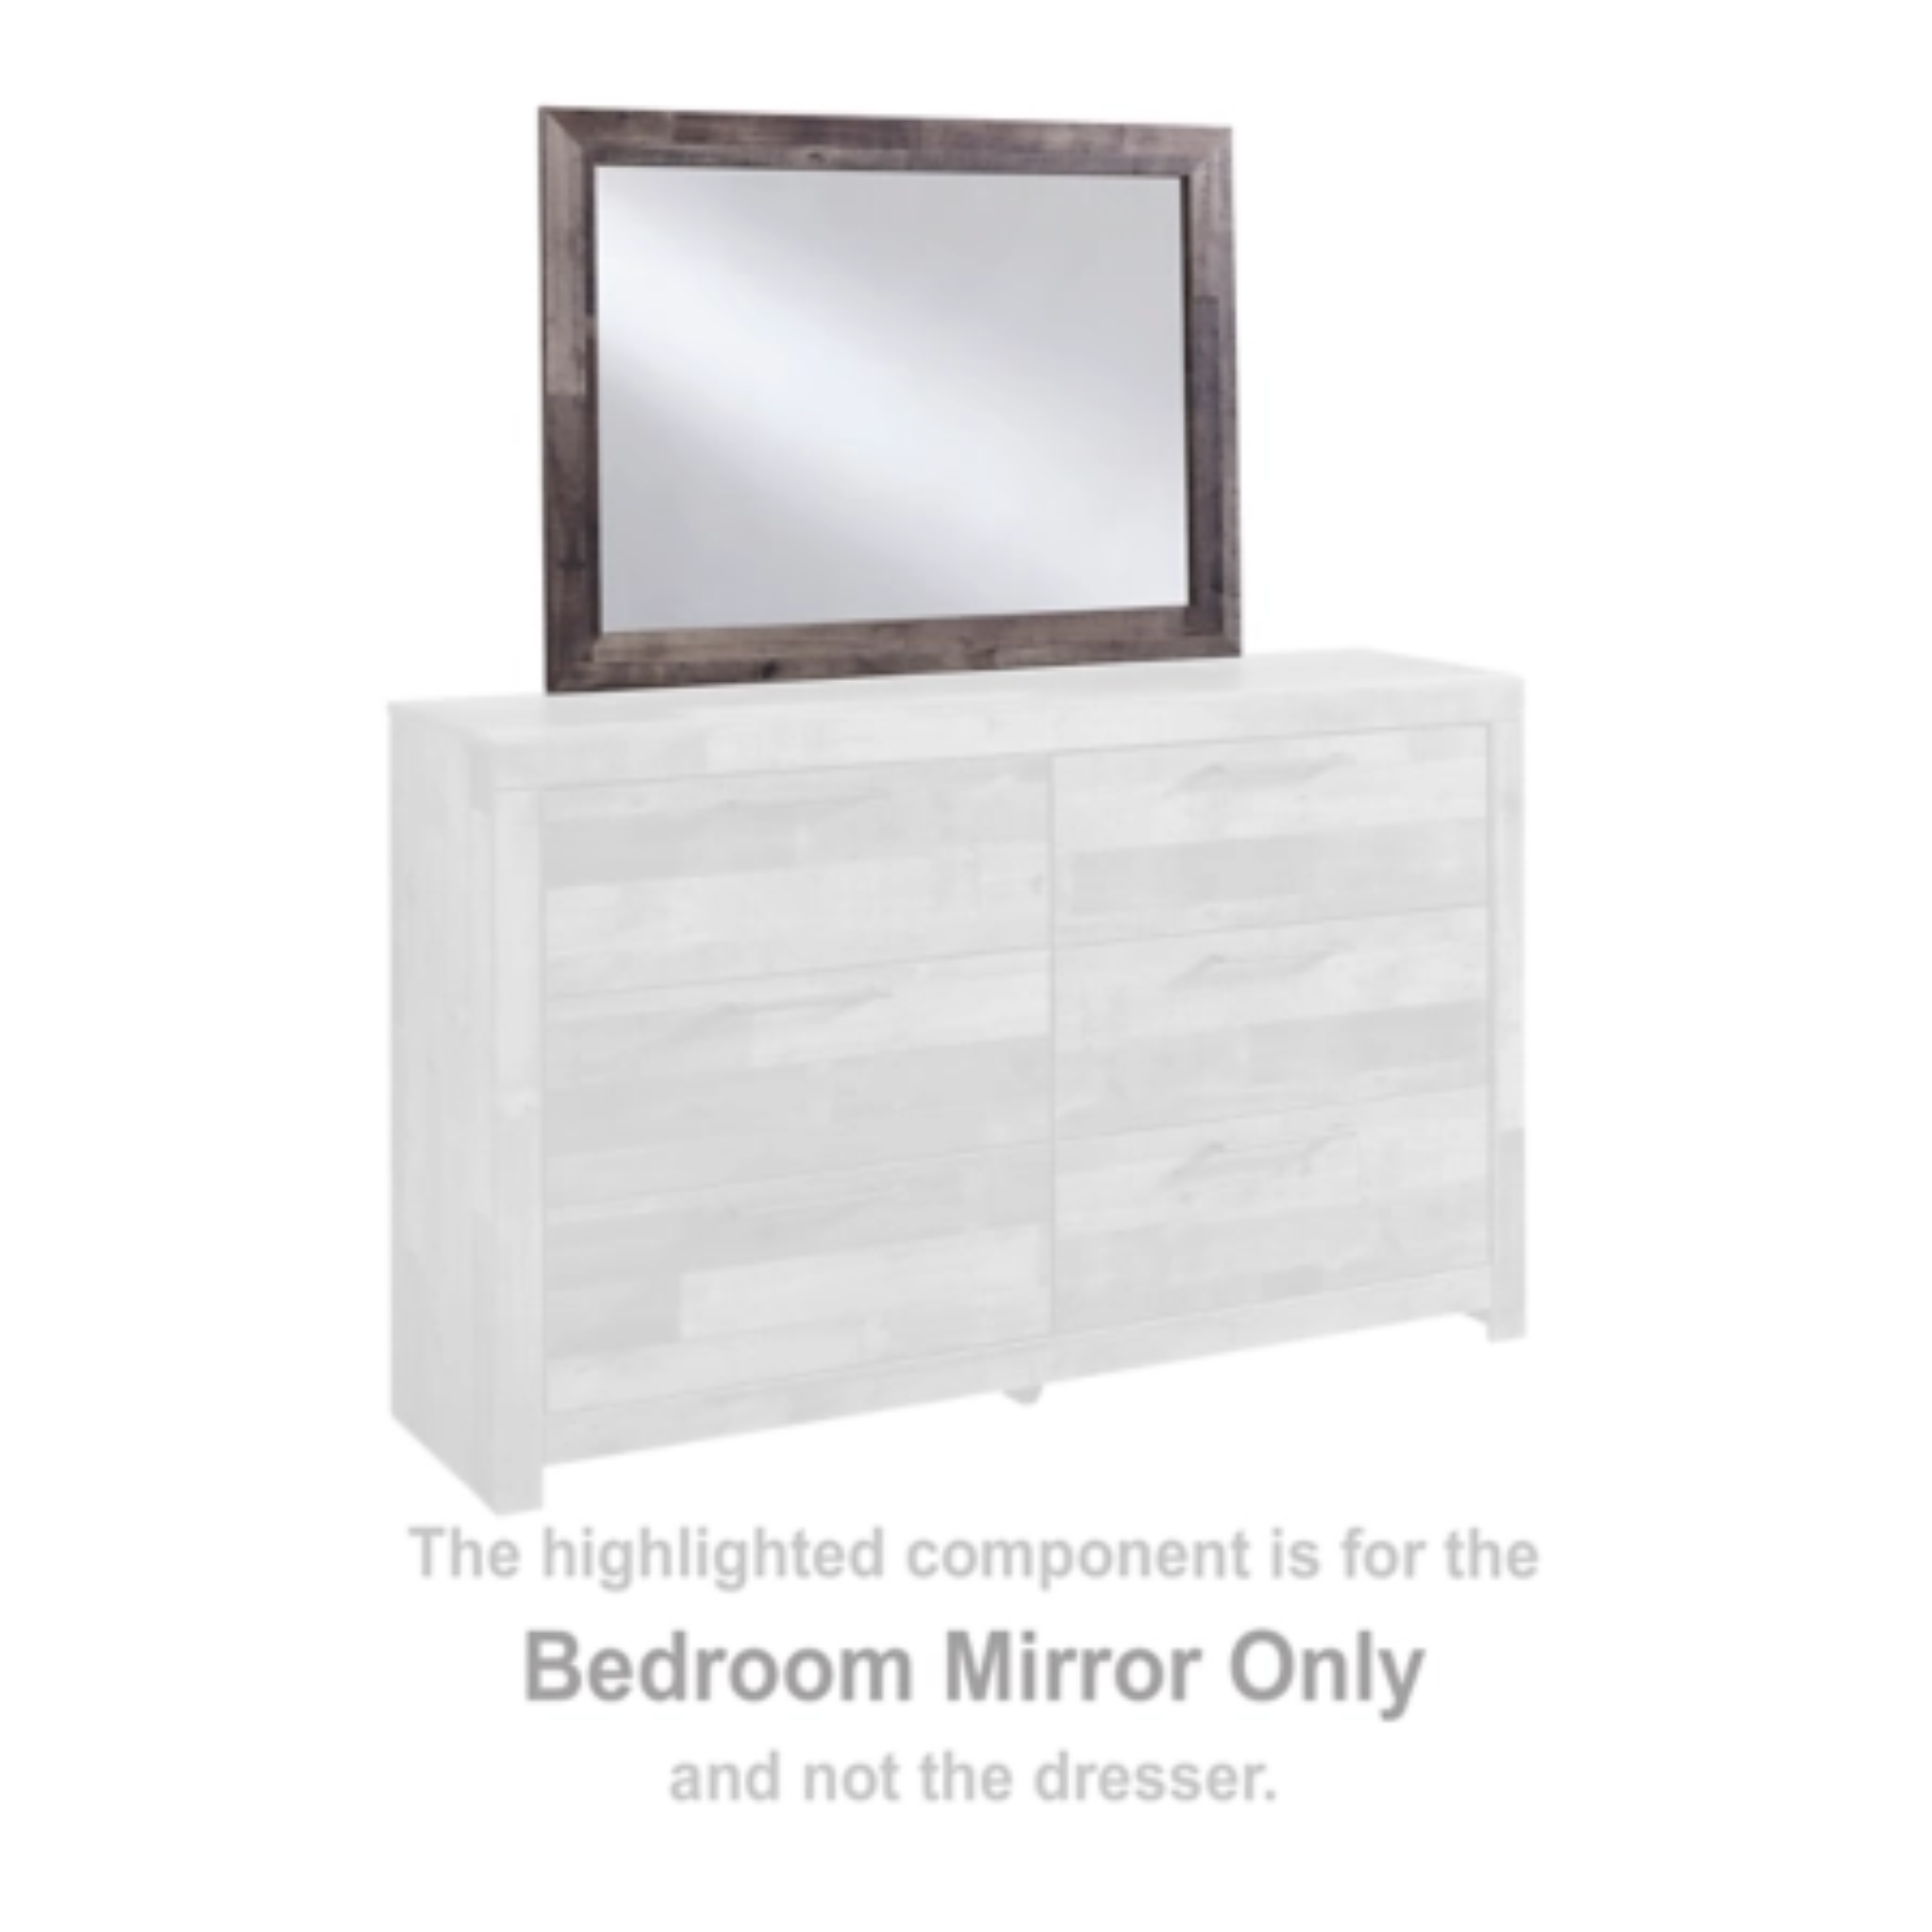 Derekson Bedroom Mirror